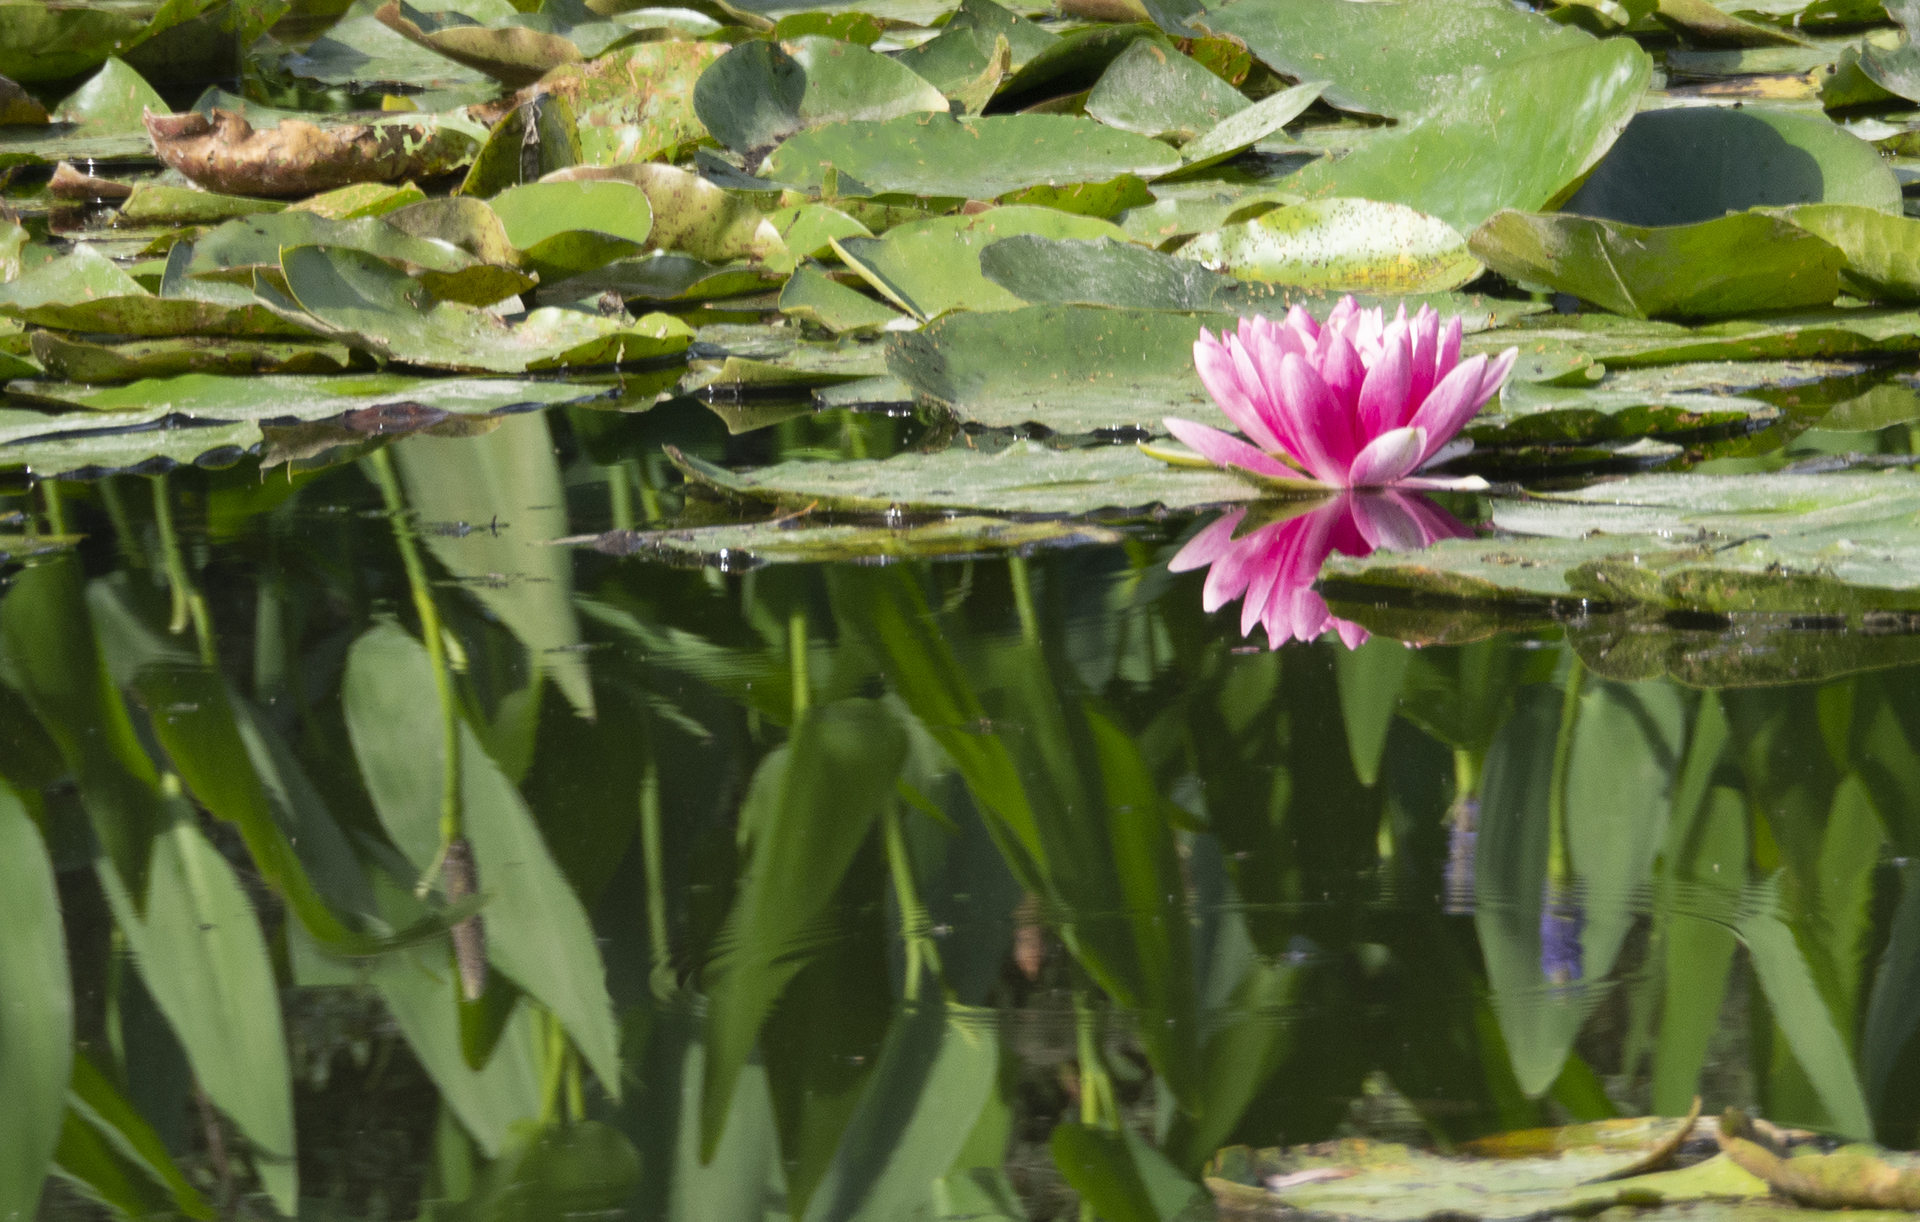 Monet's Garden. The Perfect Reflection